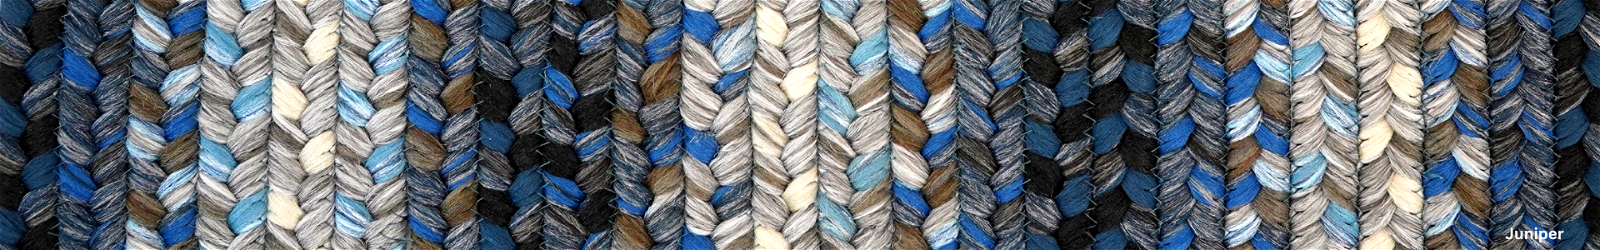 Blue Braided Rugs